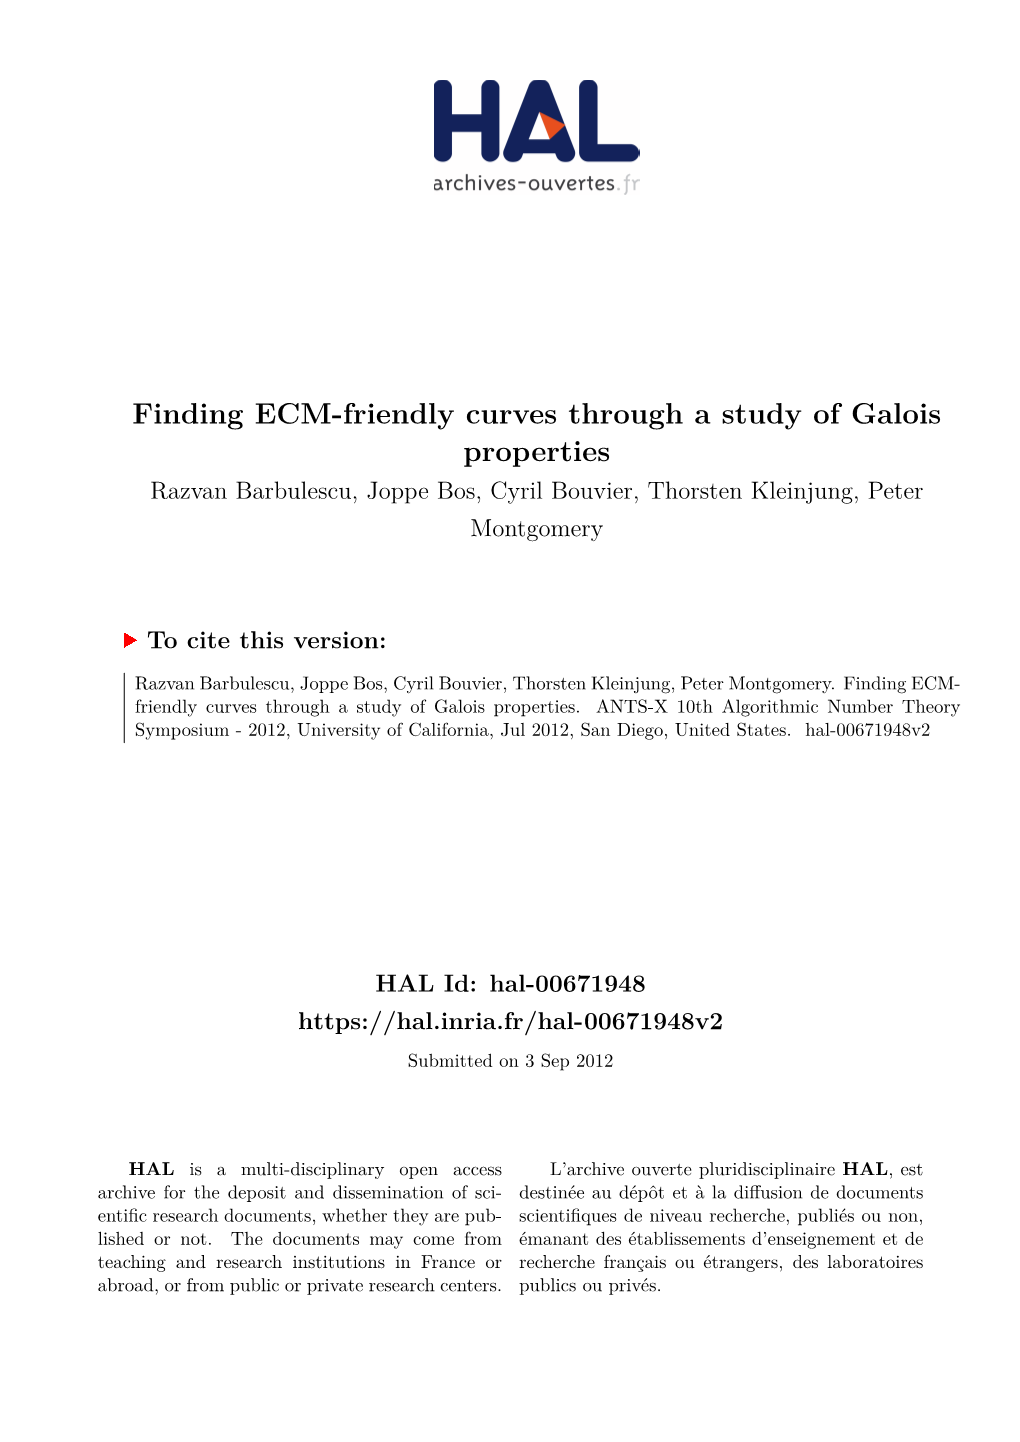 Finding ECM-Friendly Curves Through a Study of Galois Properties Razvan Barbulescu, Joppe Bos, Cyril Bouvier, Thorsten Kleinjung, Peter Montgomery